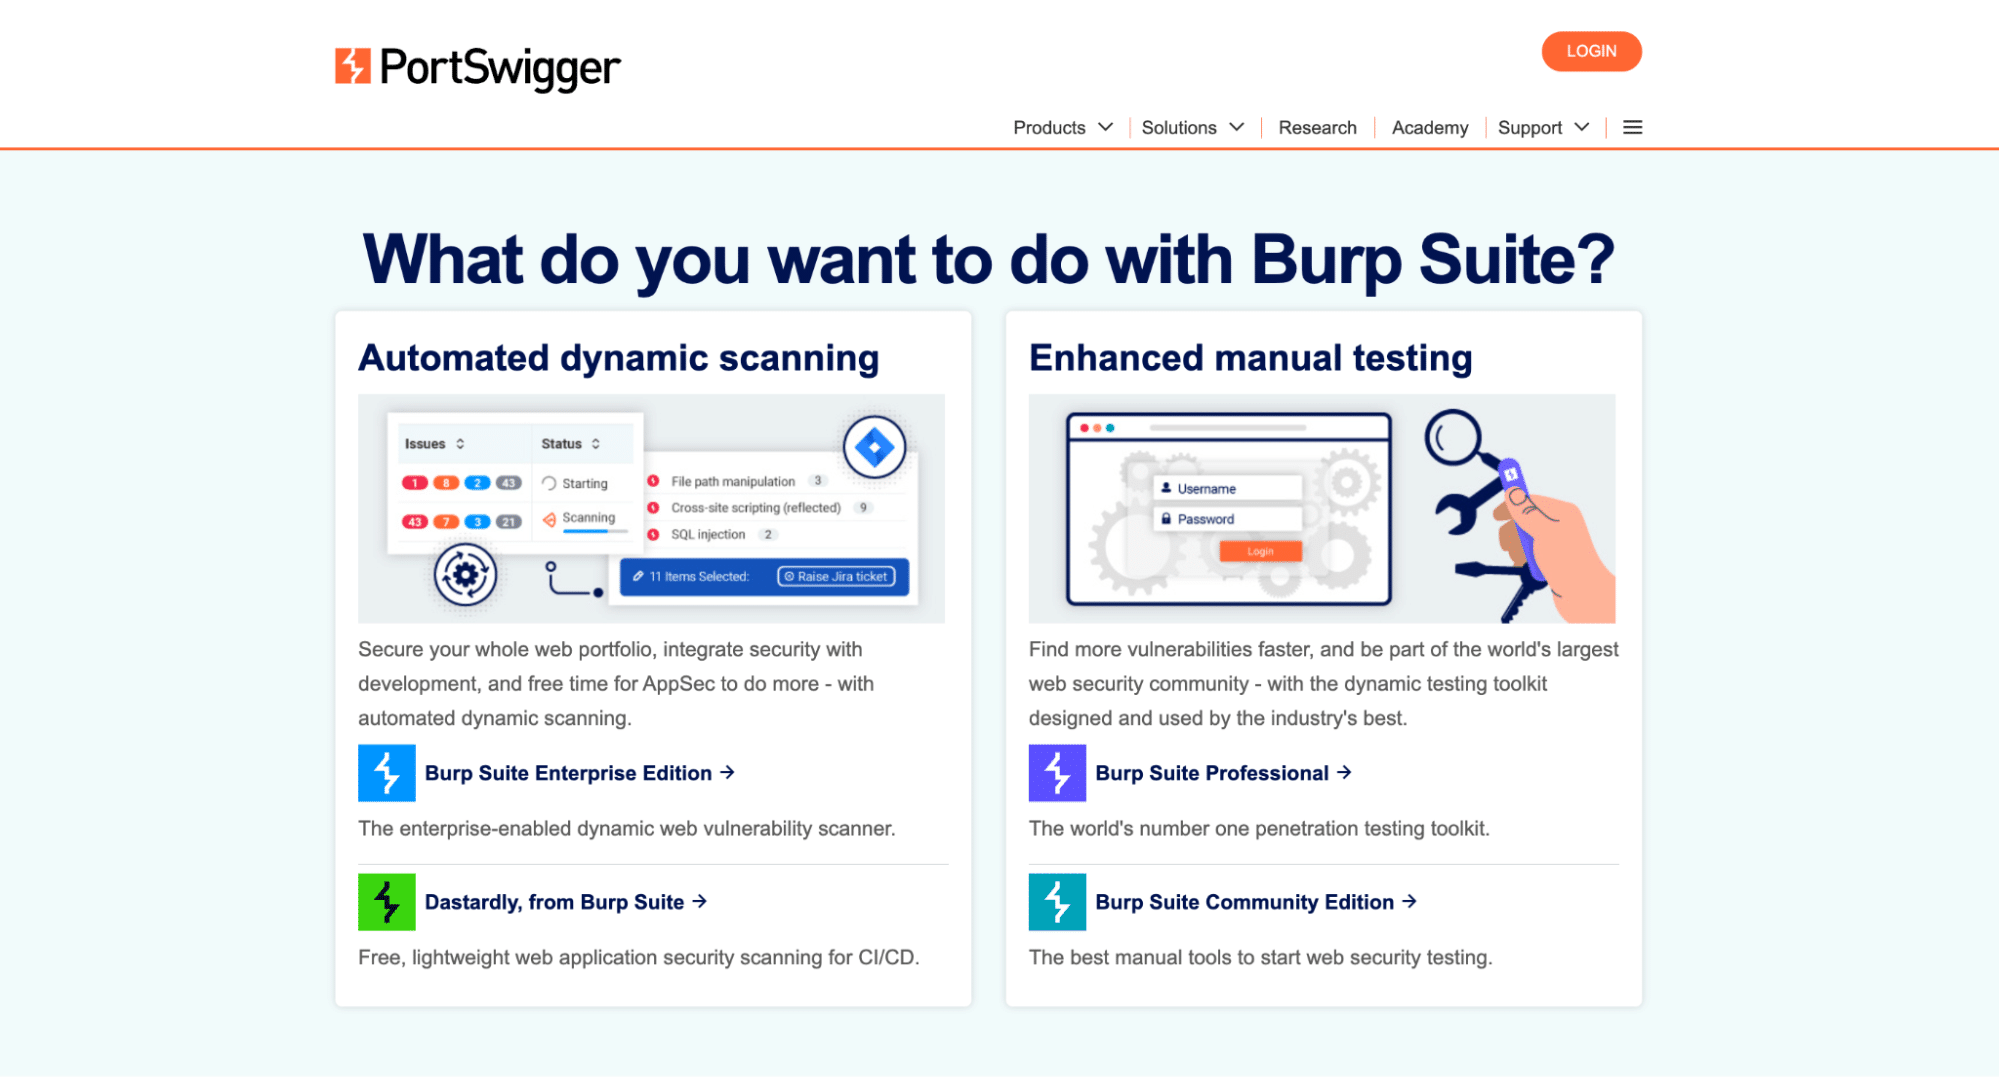 Burp-suite-penetration-testing-tool